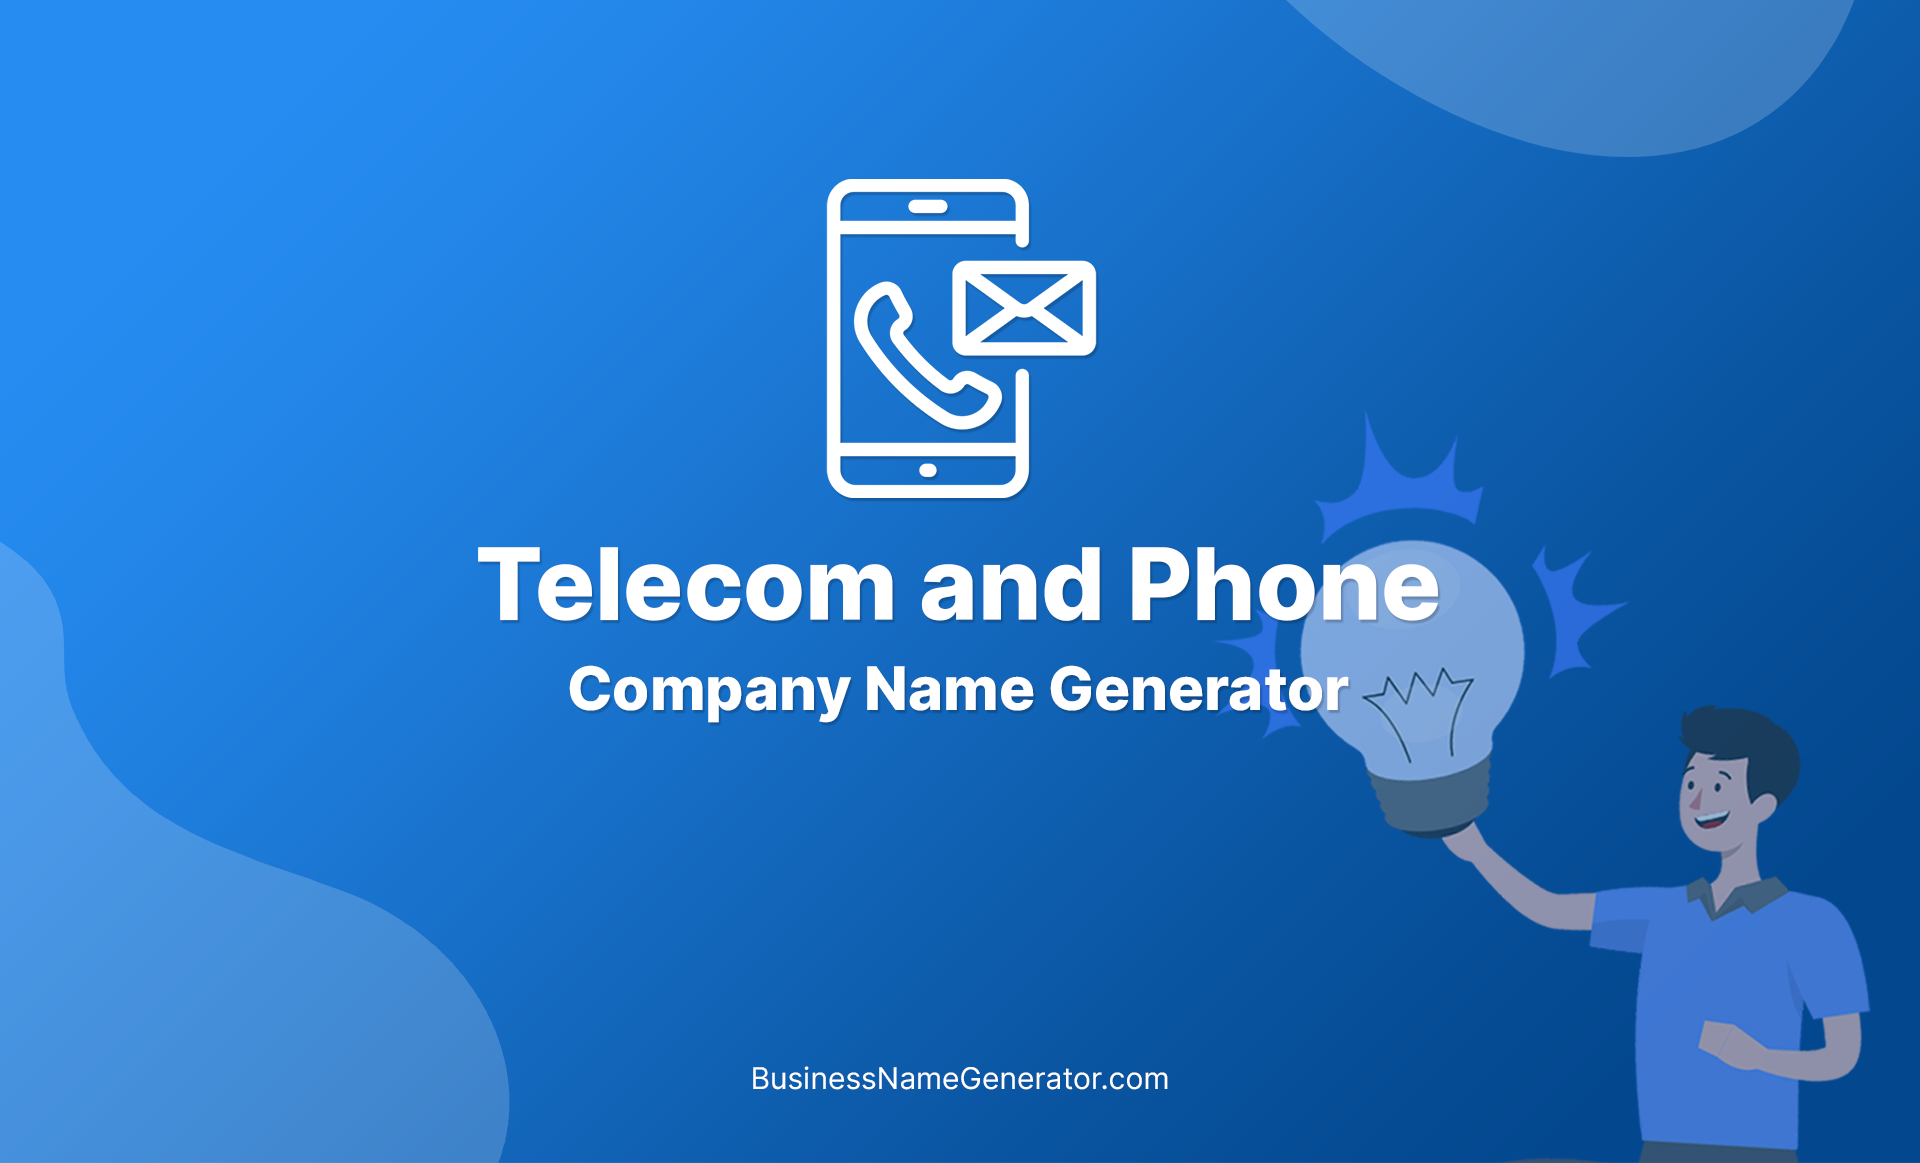 Telecom and Phone Company Name Generator